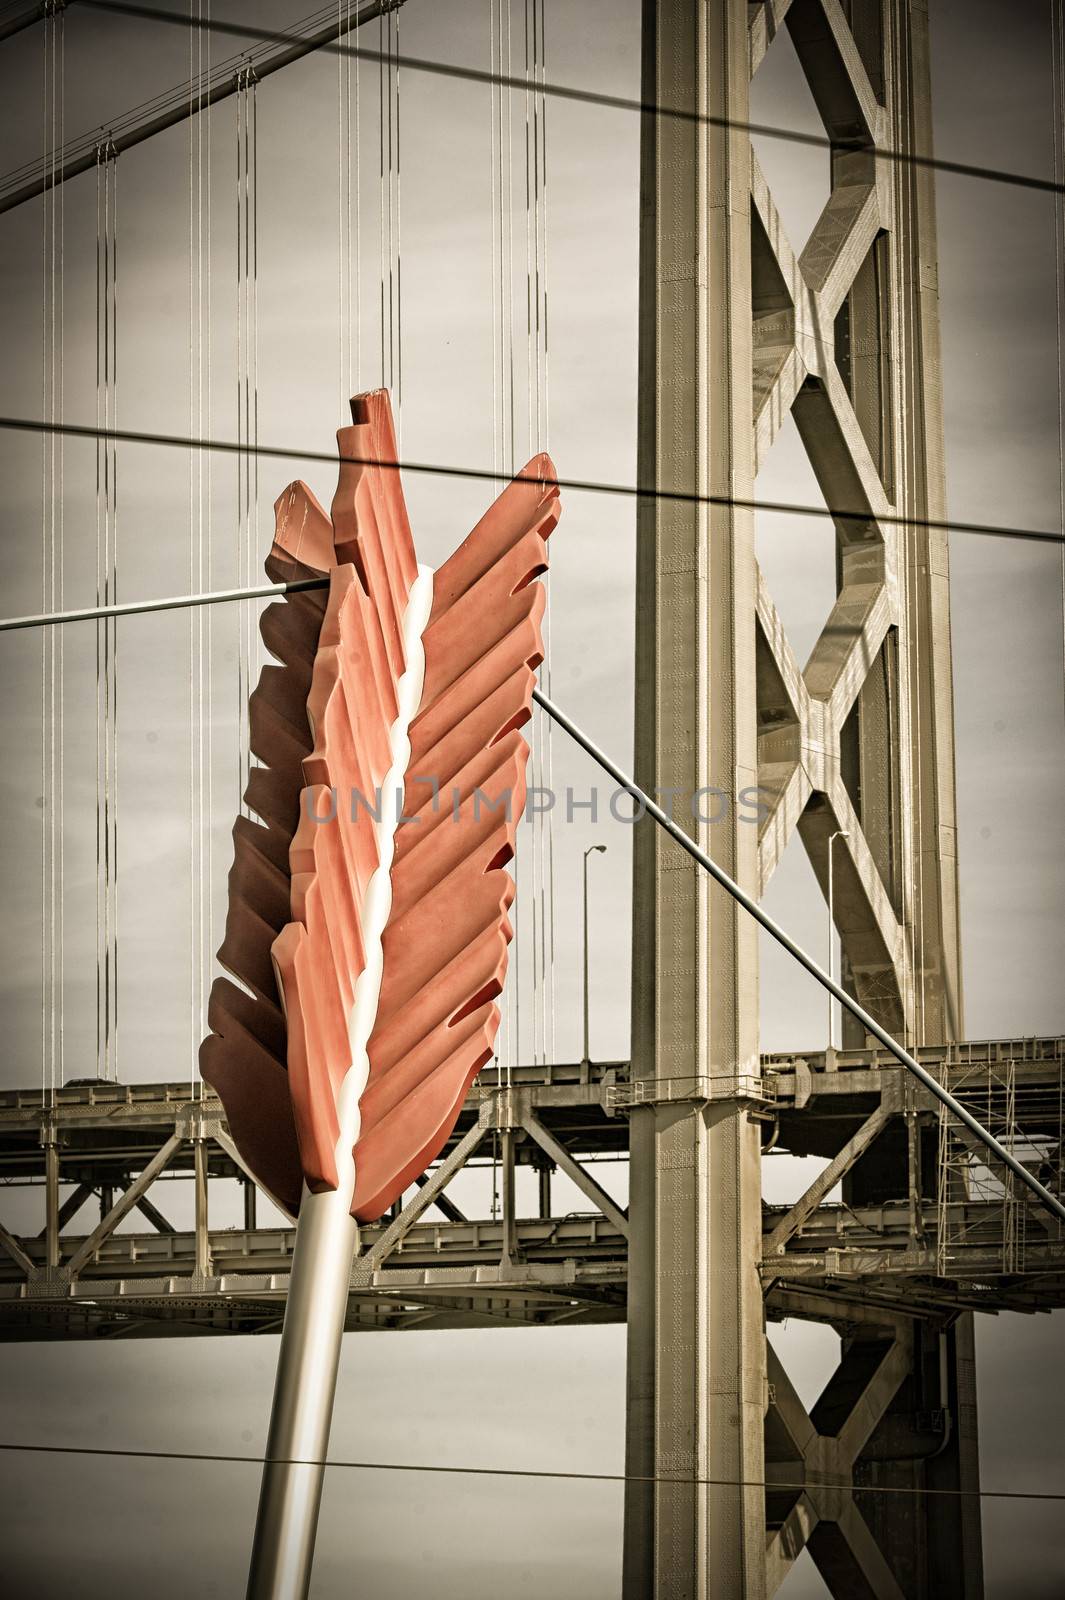 Cupids Arrow and Golden Gate Bridge by CelsoDiniz